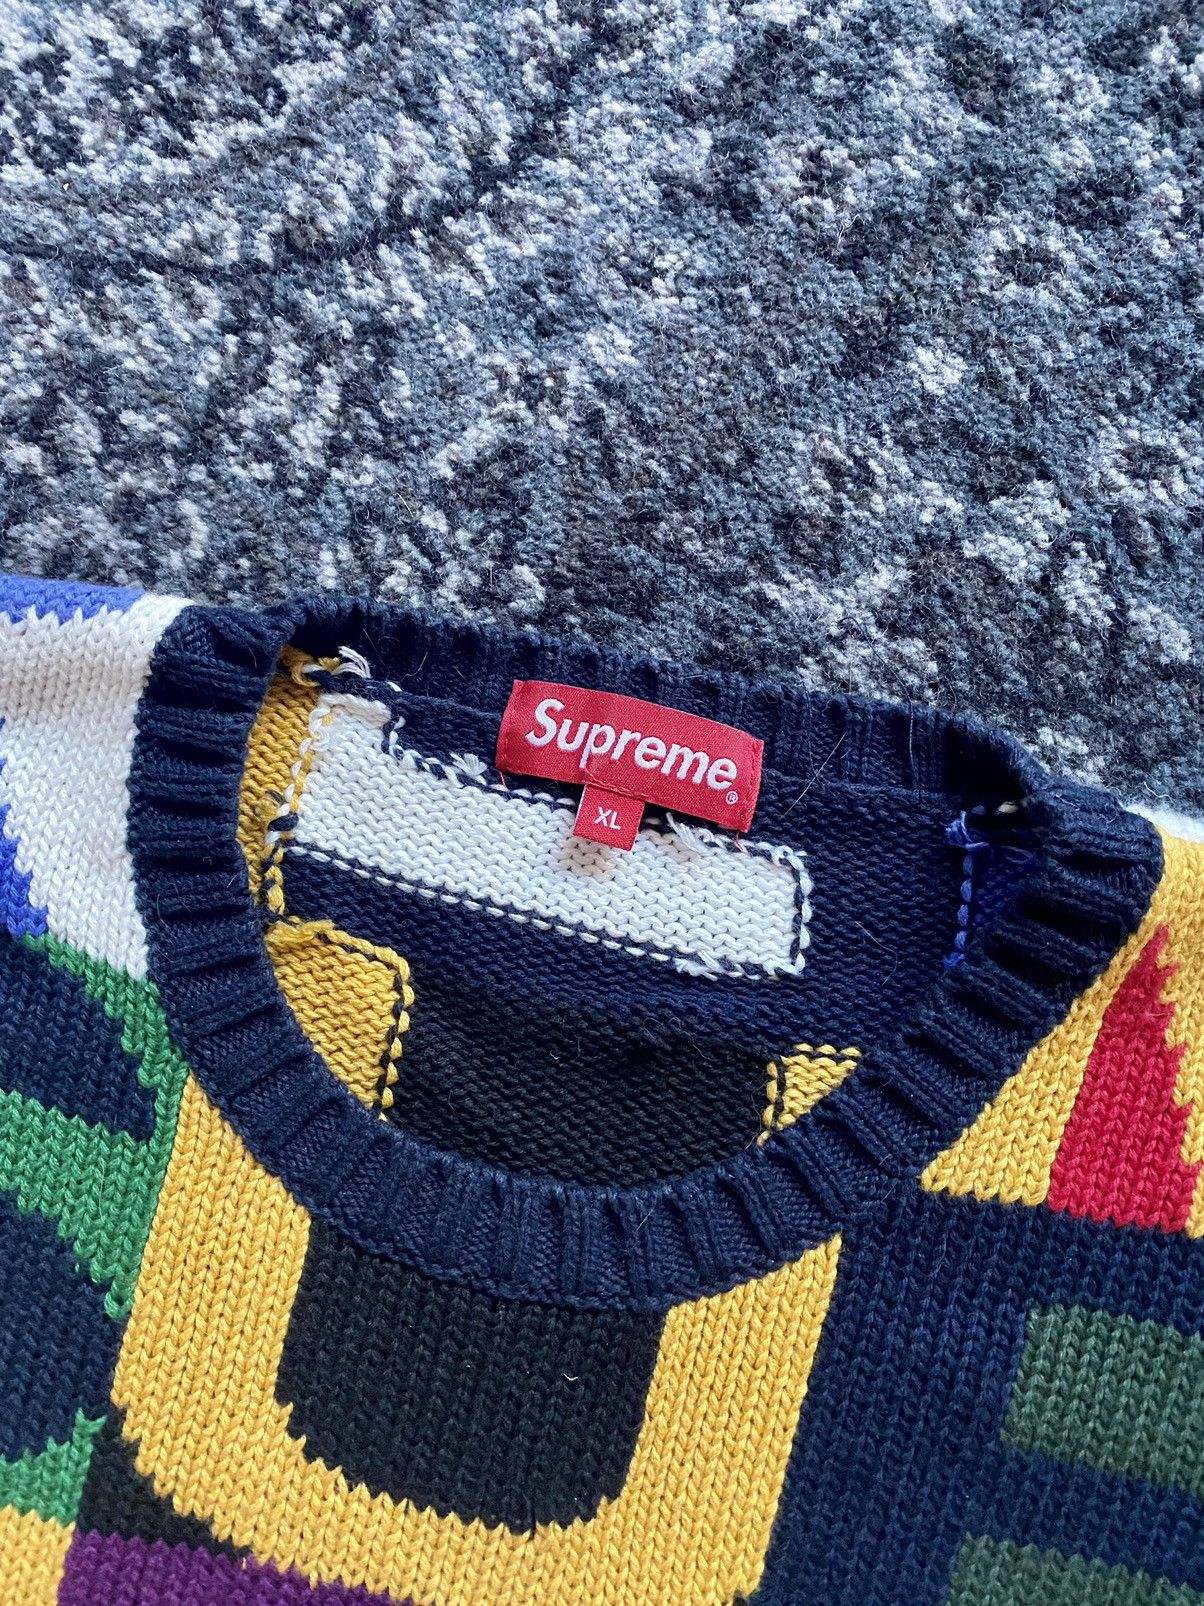 Supreme Big Letters Sweater Size US XL / EU 56 / 4 - 2 Preview